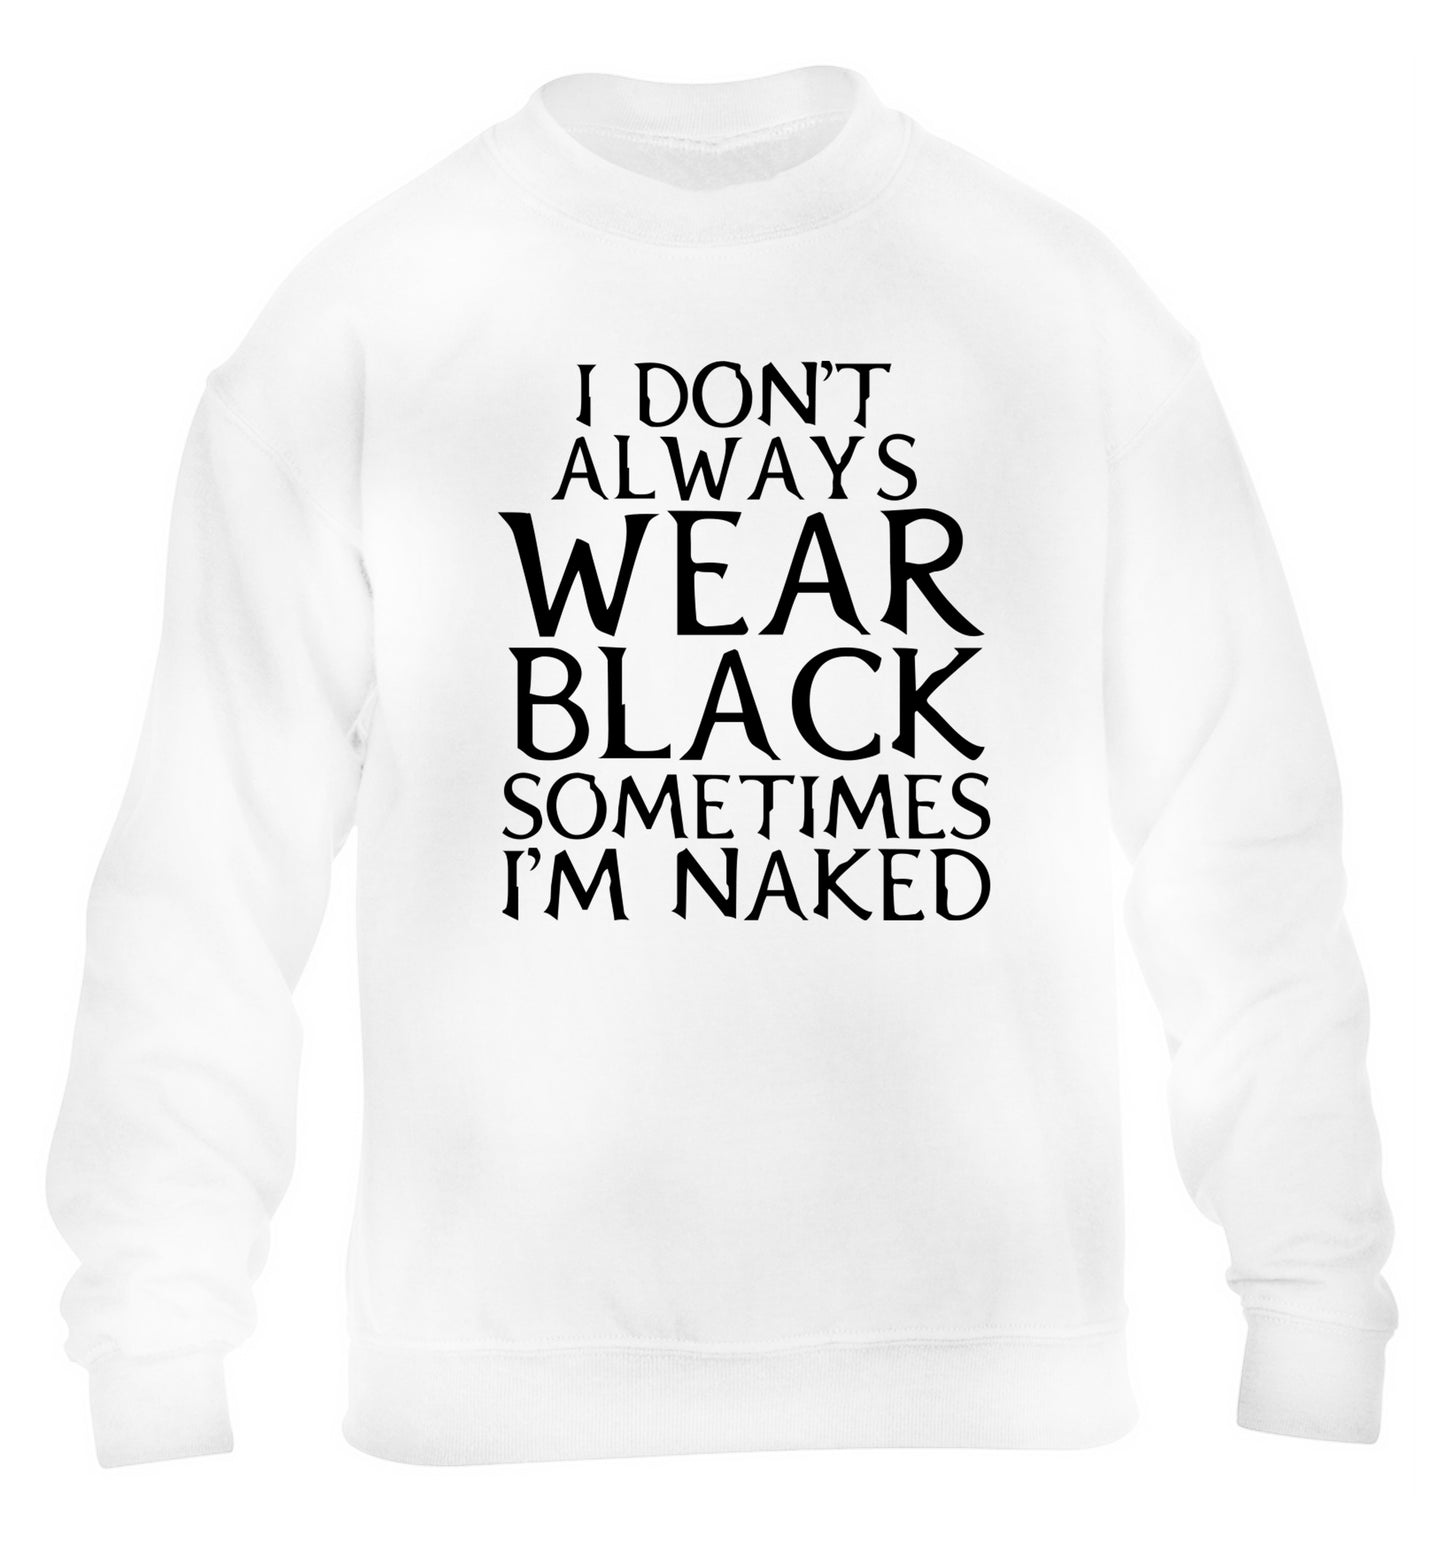 I don't always wear black sometimes I'm naked children's white sweater 12-13 Years